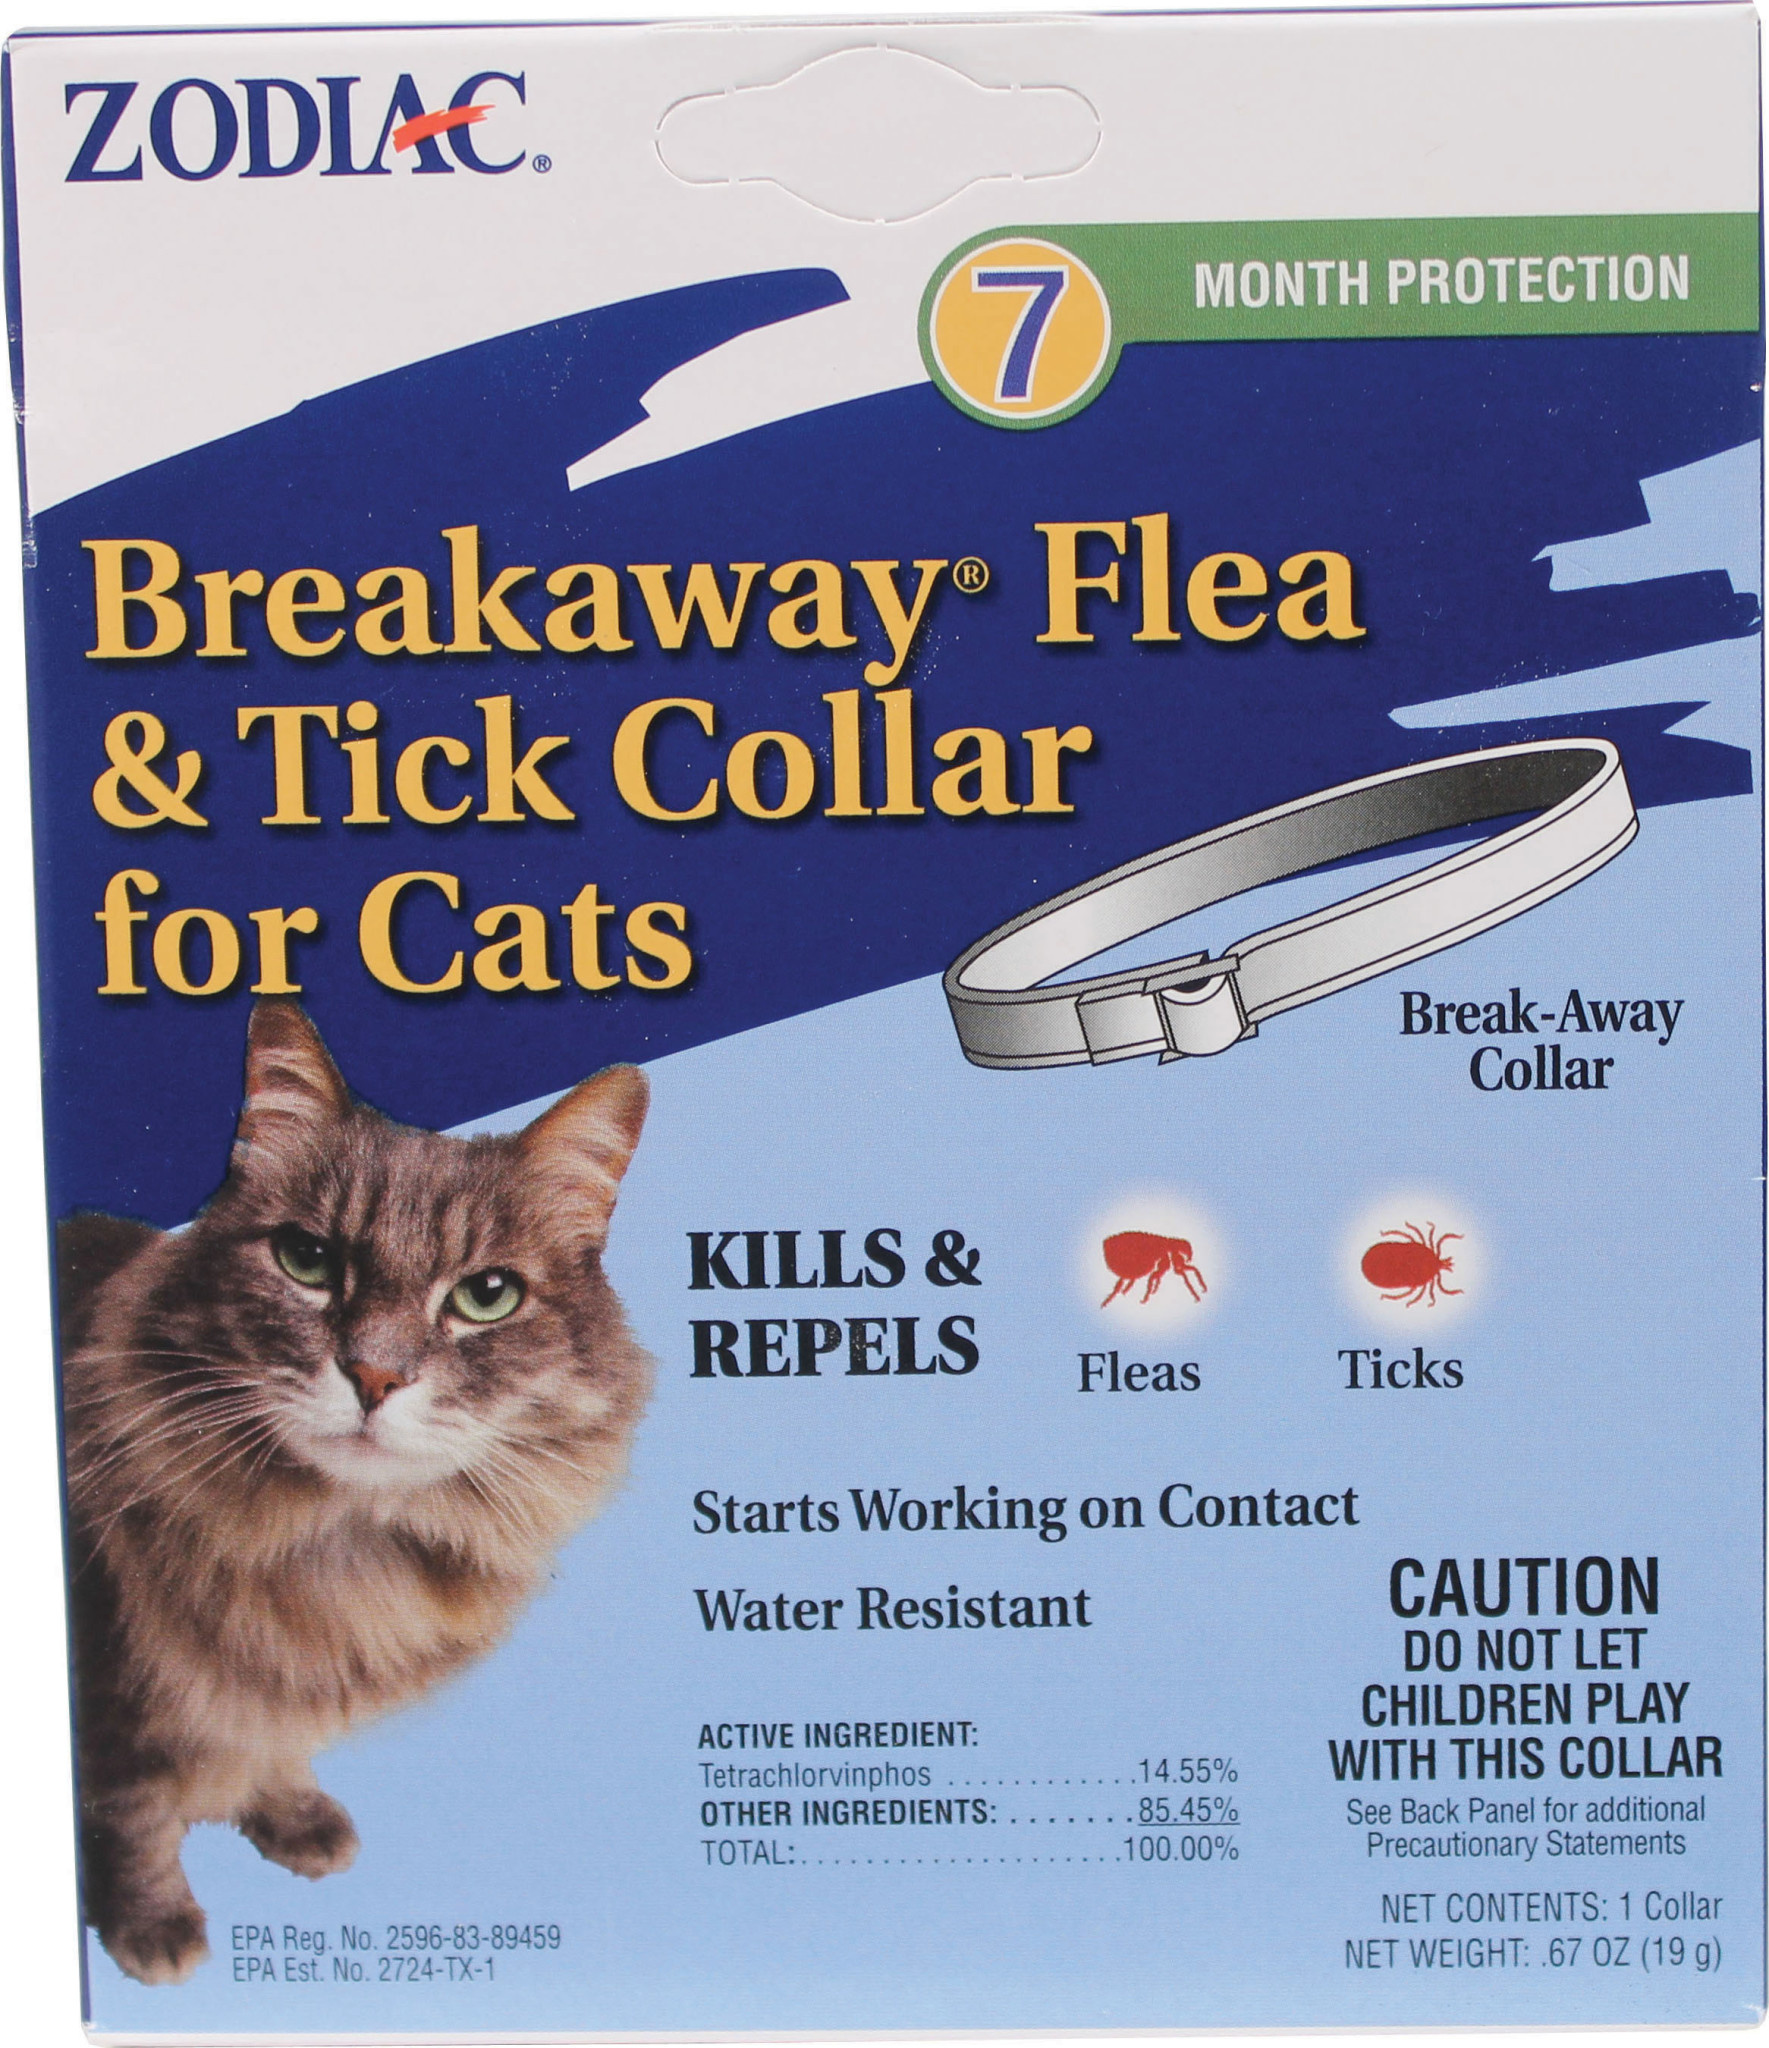 ZODIAC FLEA & TICK BREAKAWAY COLLAR FOR CATS